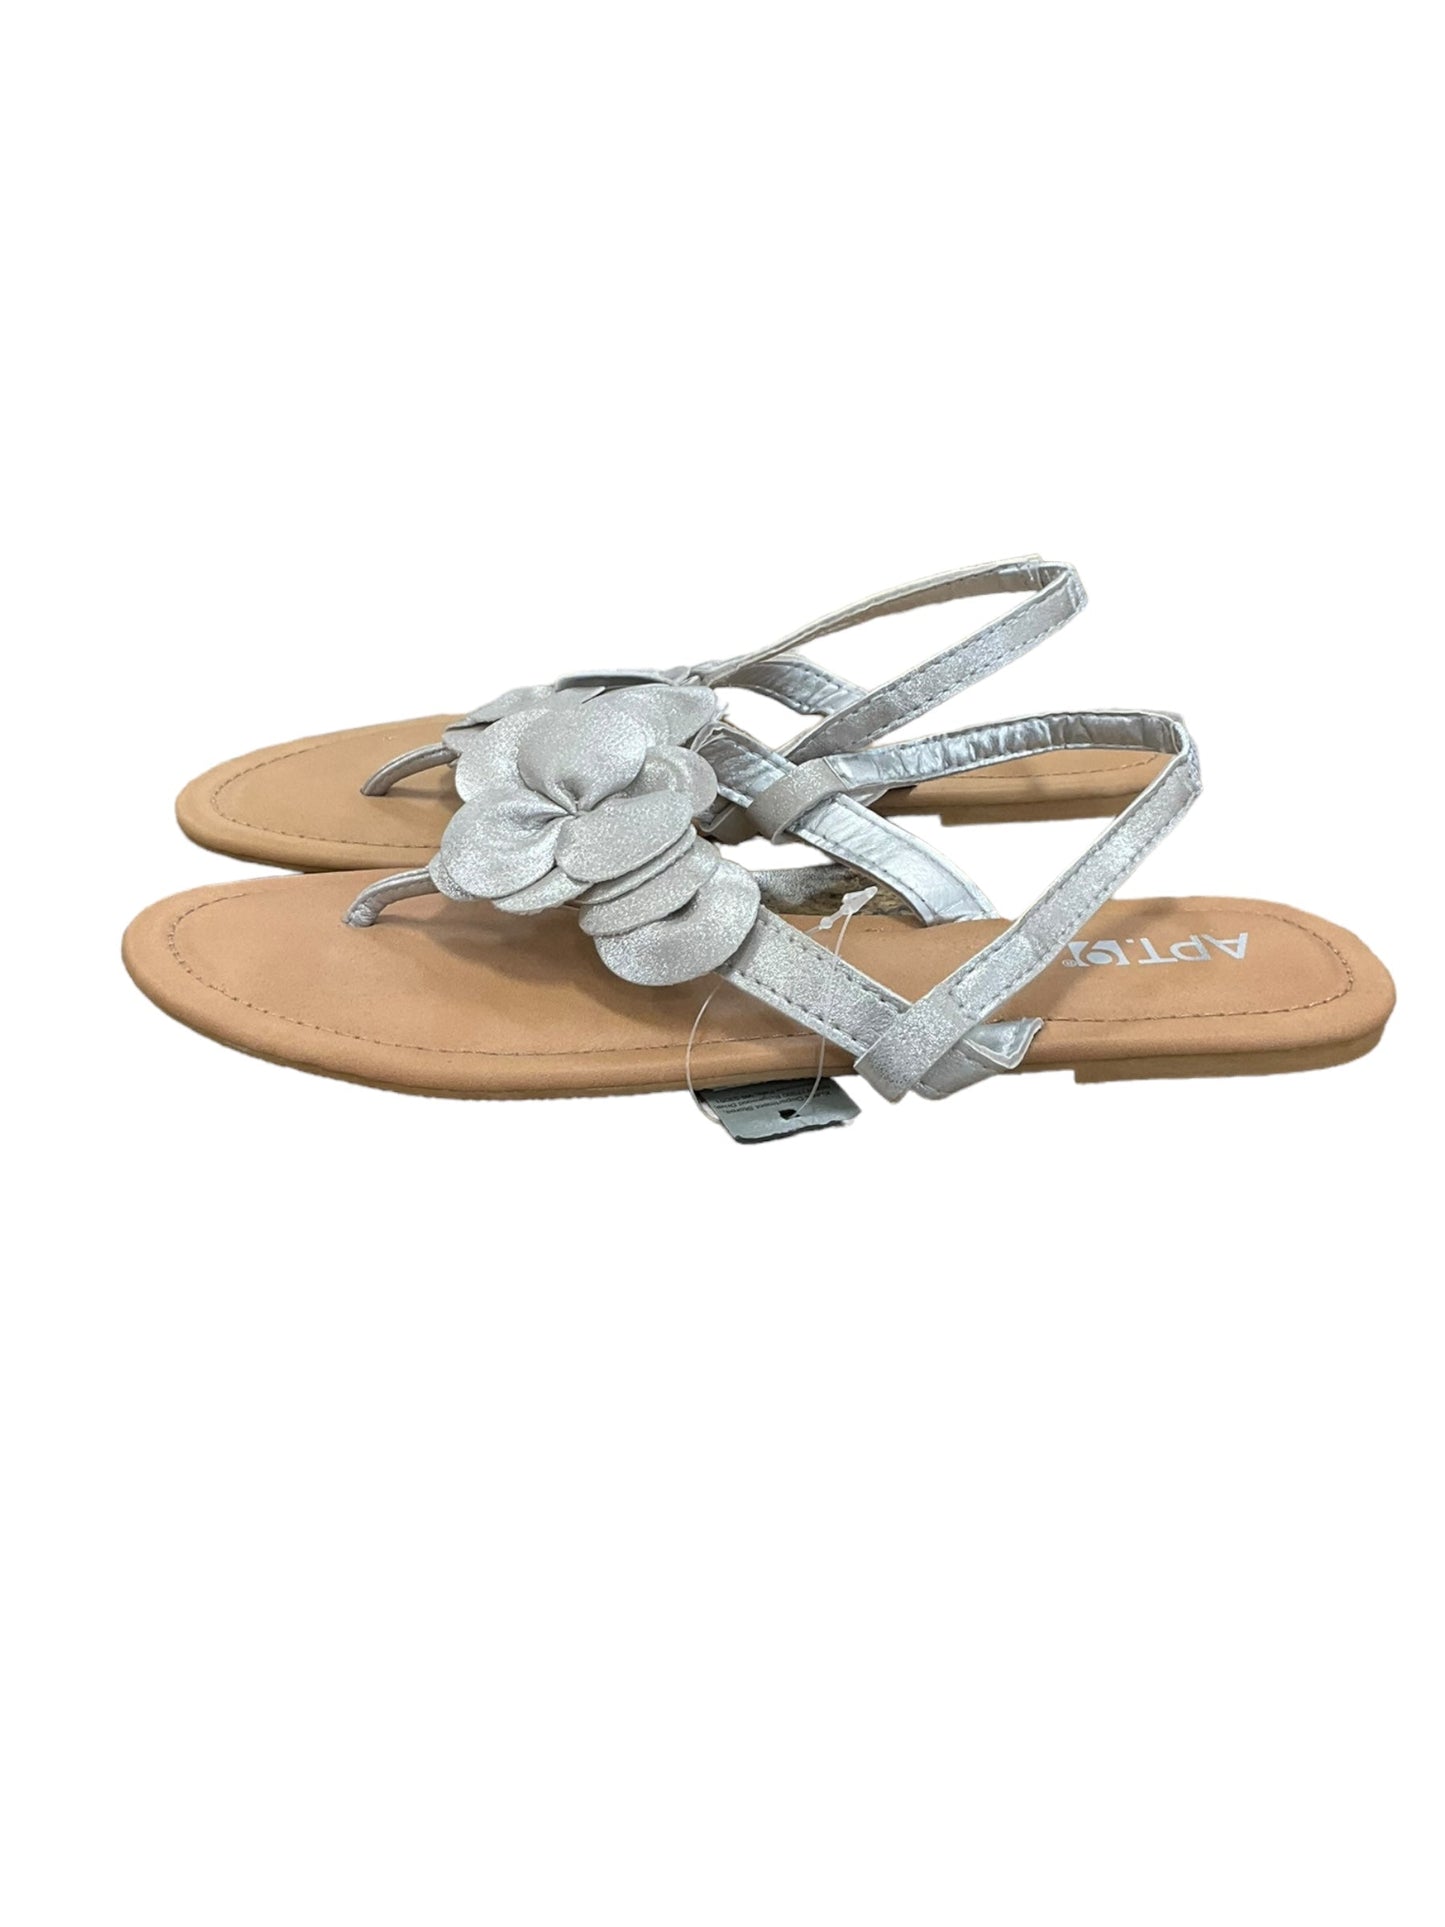 Sandals Flip Flops By Apt 9  Size: 7